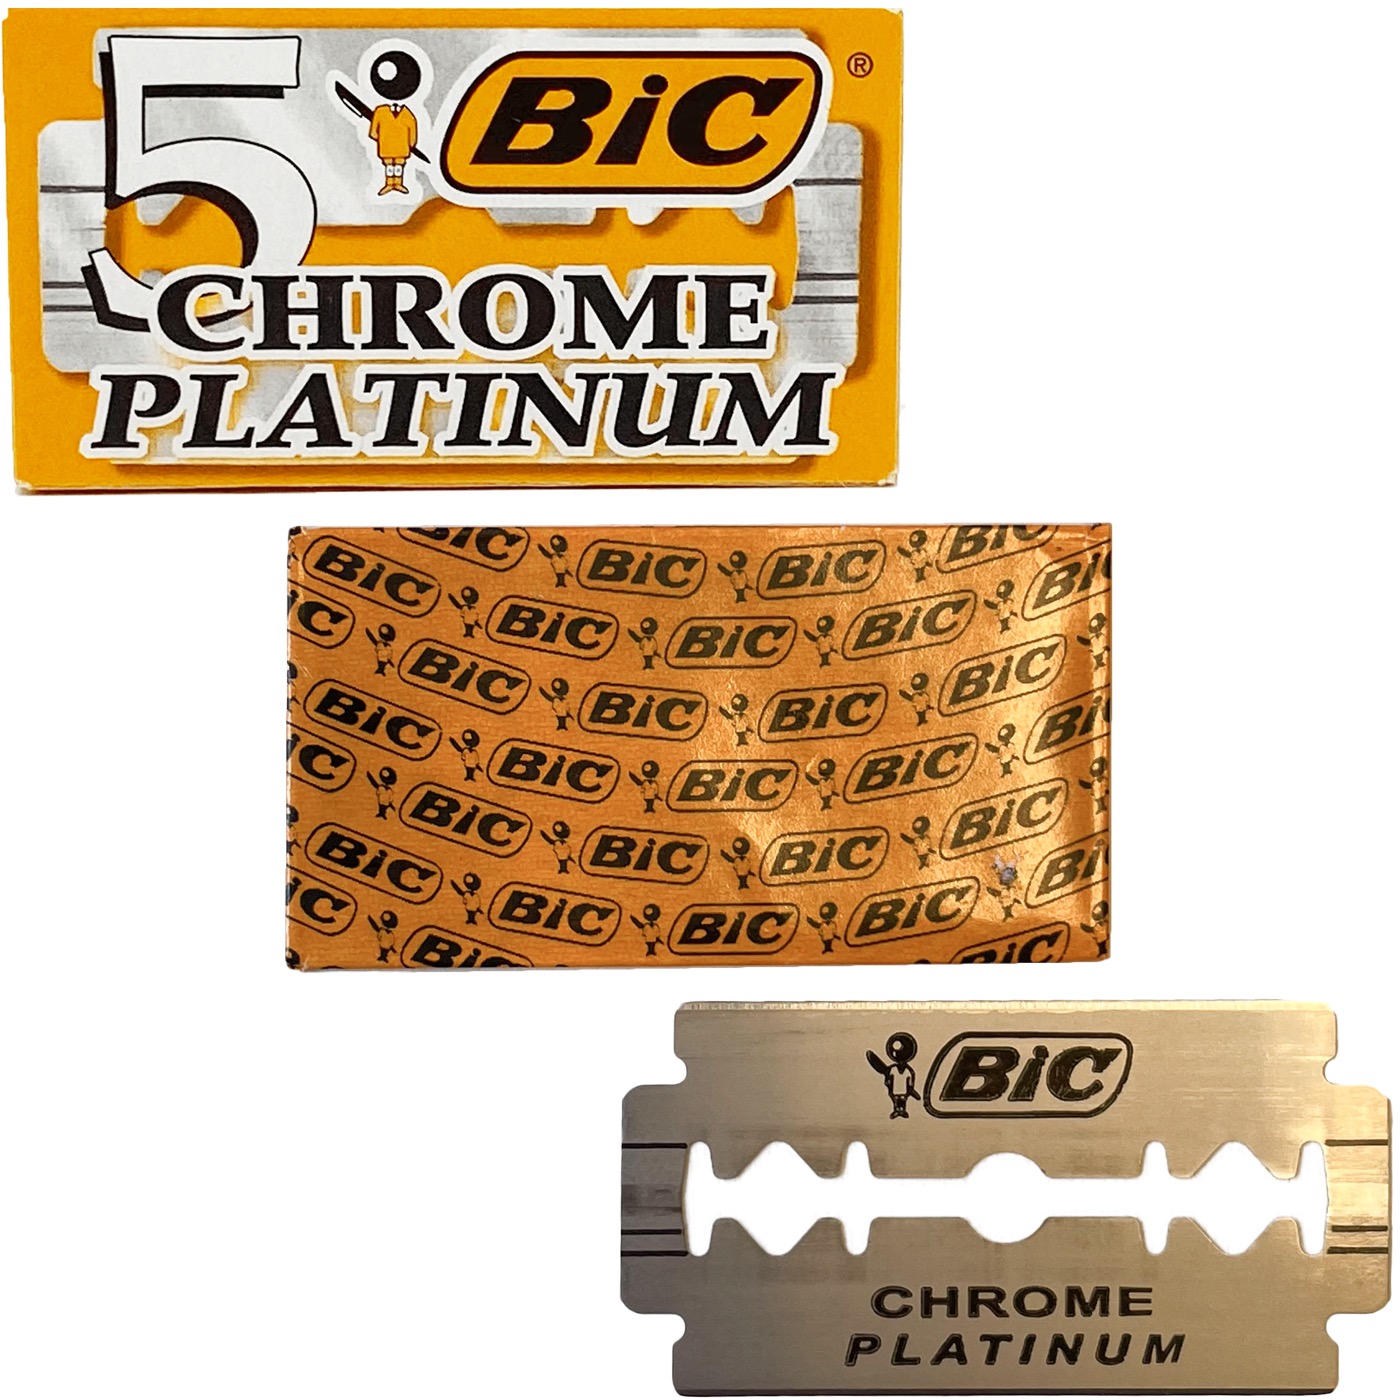 Double Edge Blades Chrome Platinum